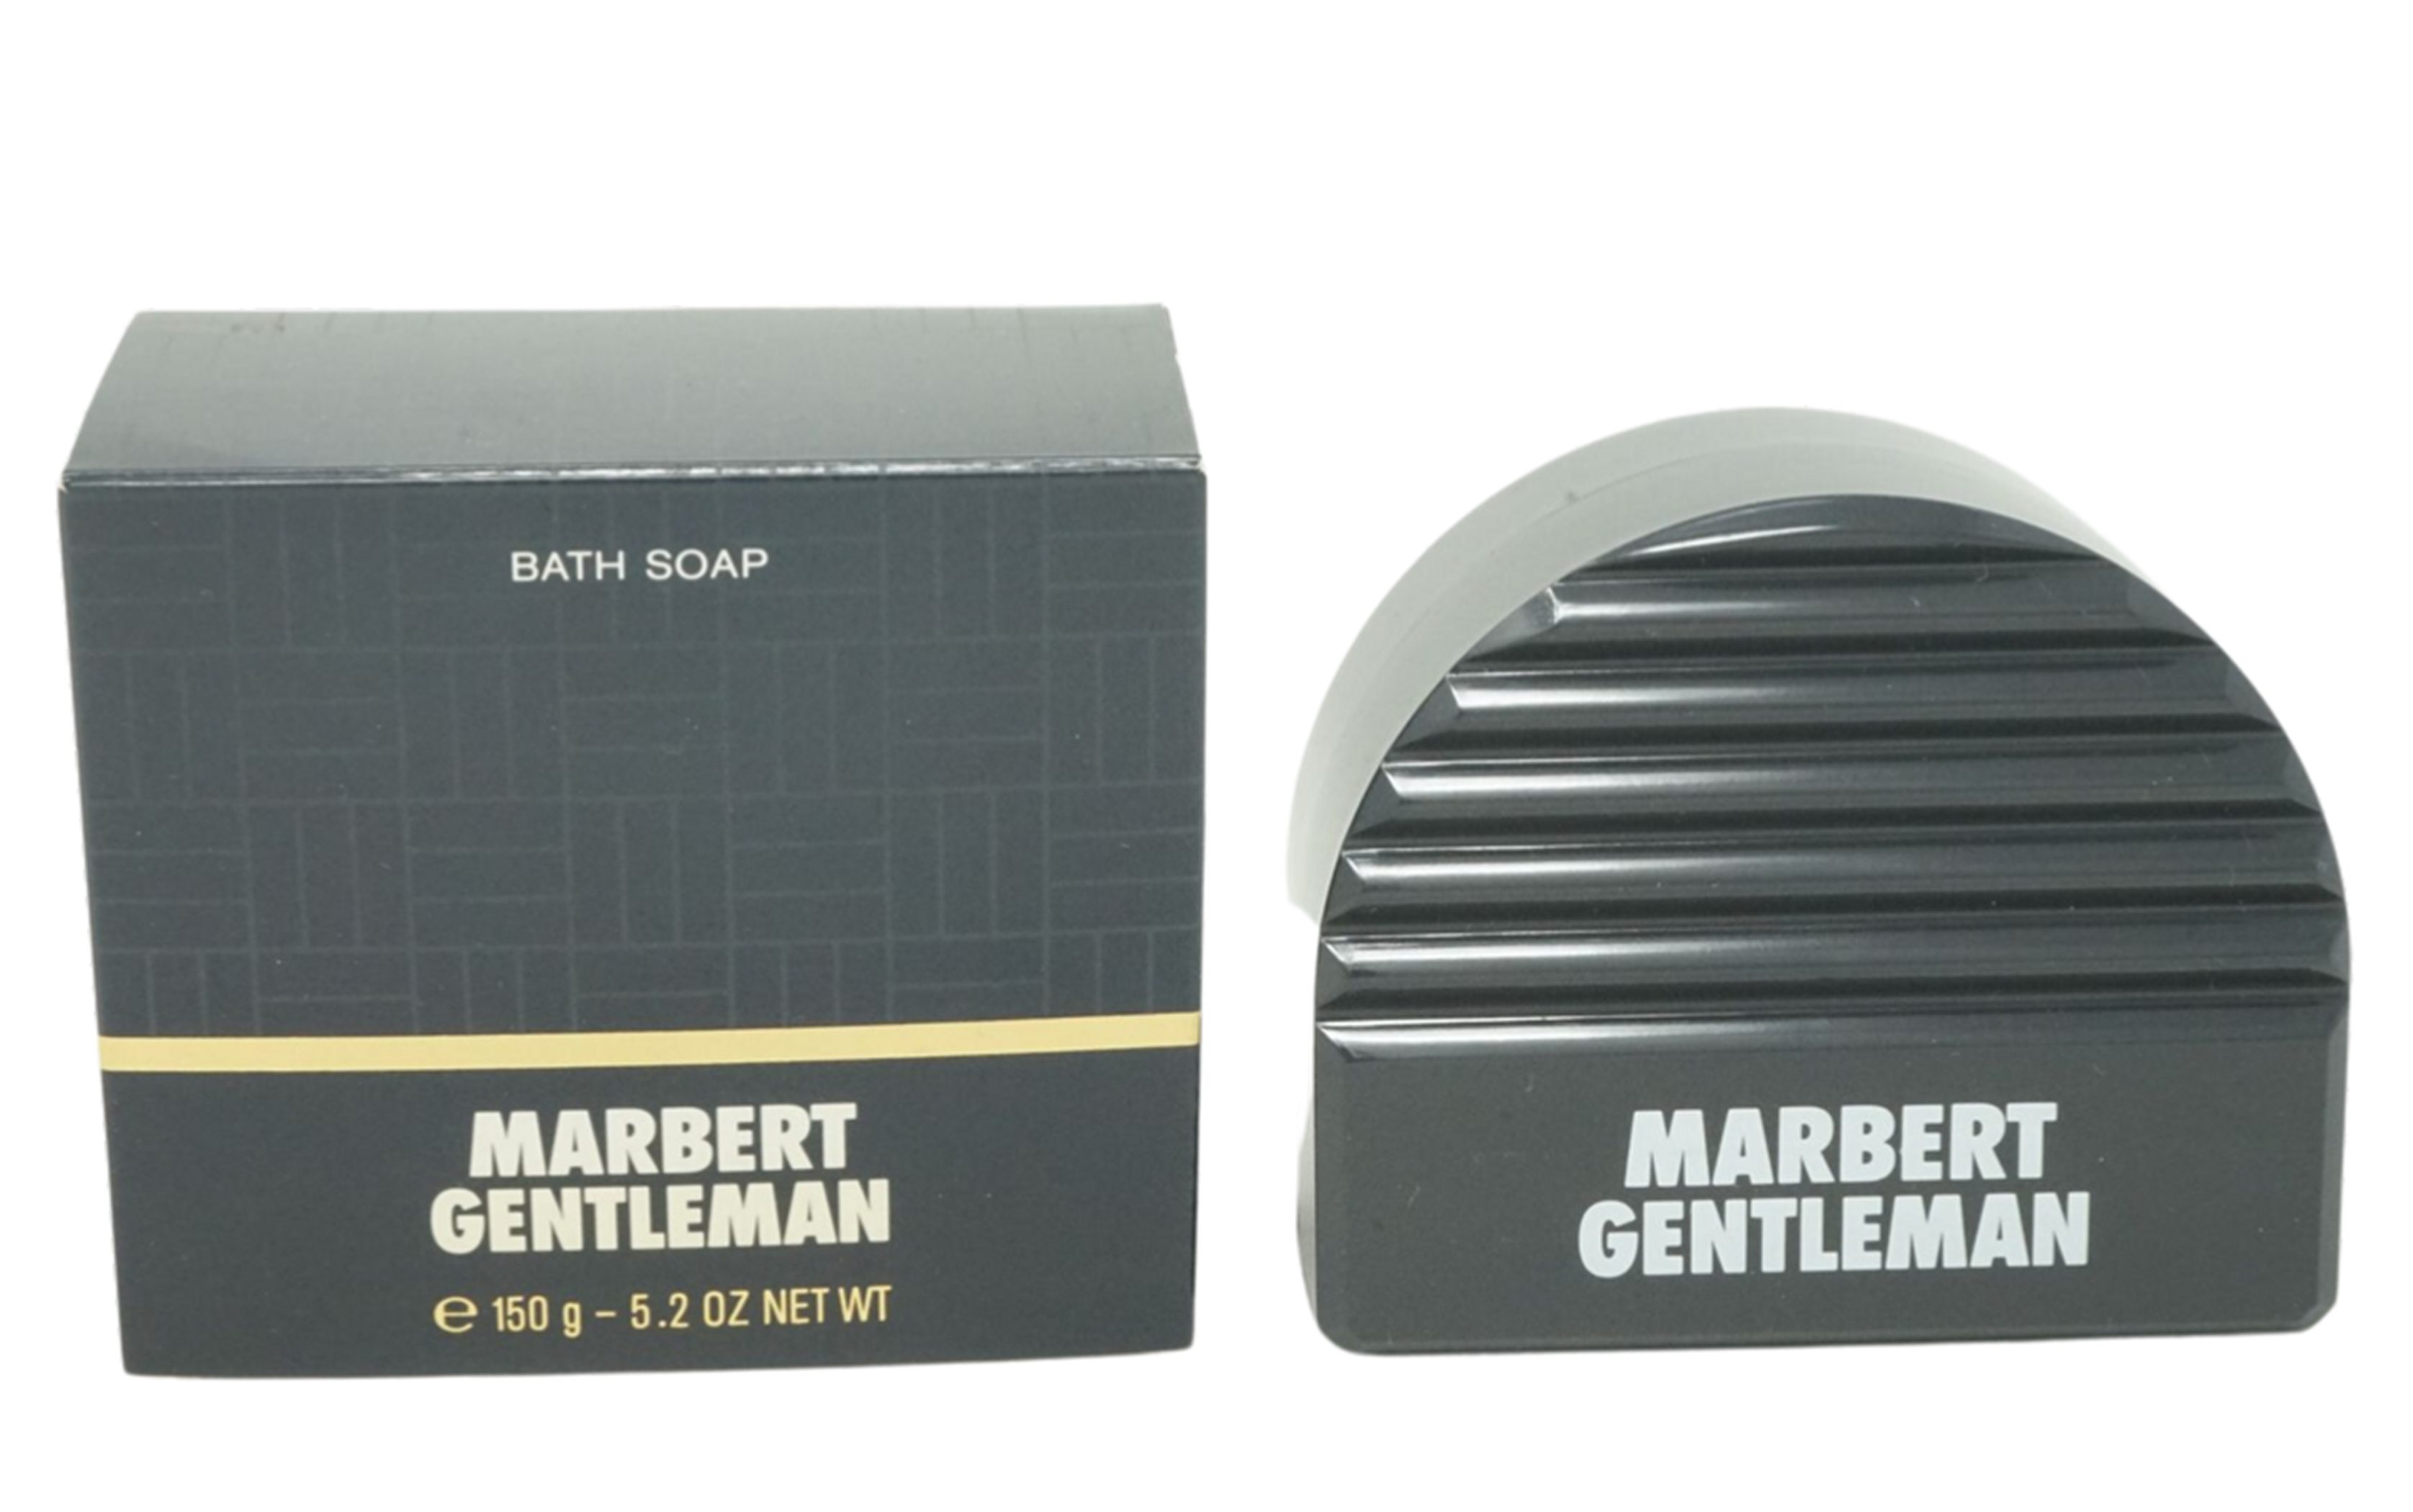 Marbert Handseife Marbert Gentleman Bath Soap Seife 150g